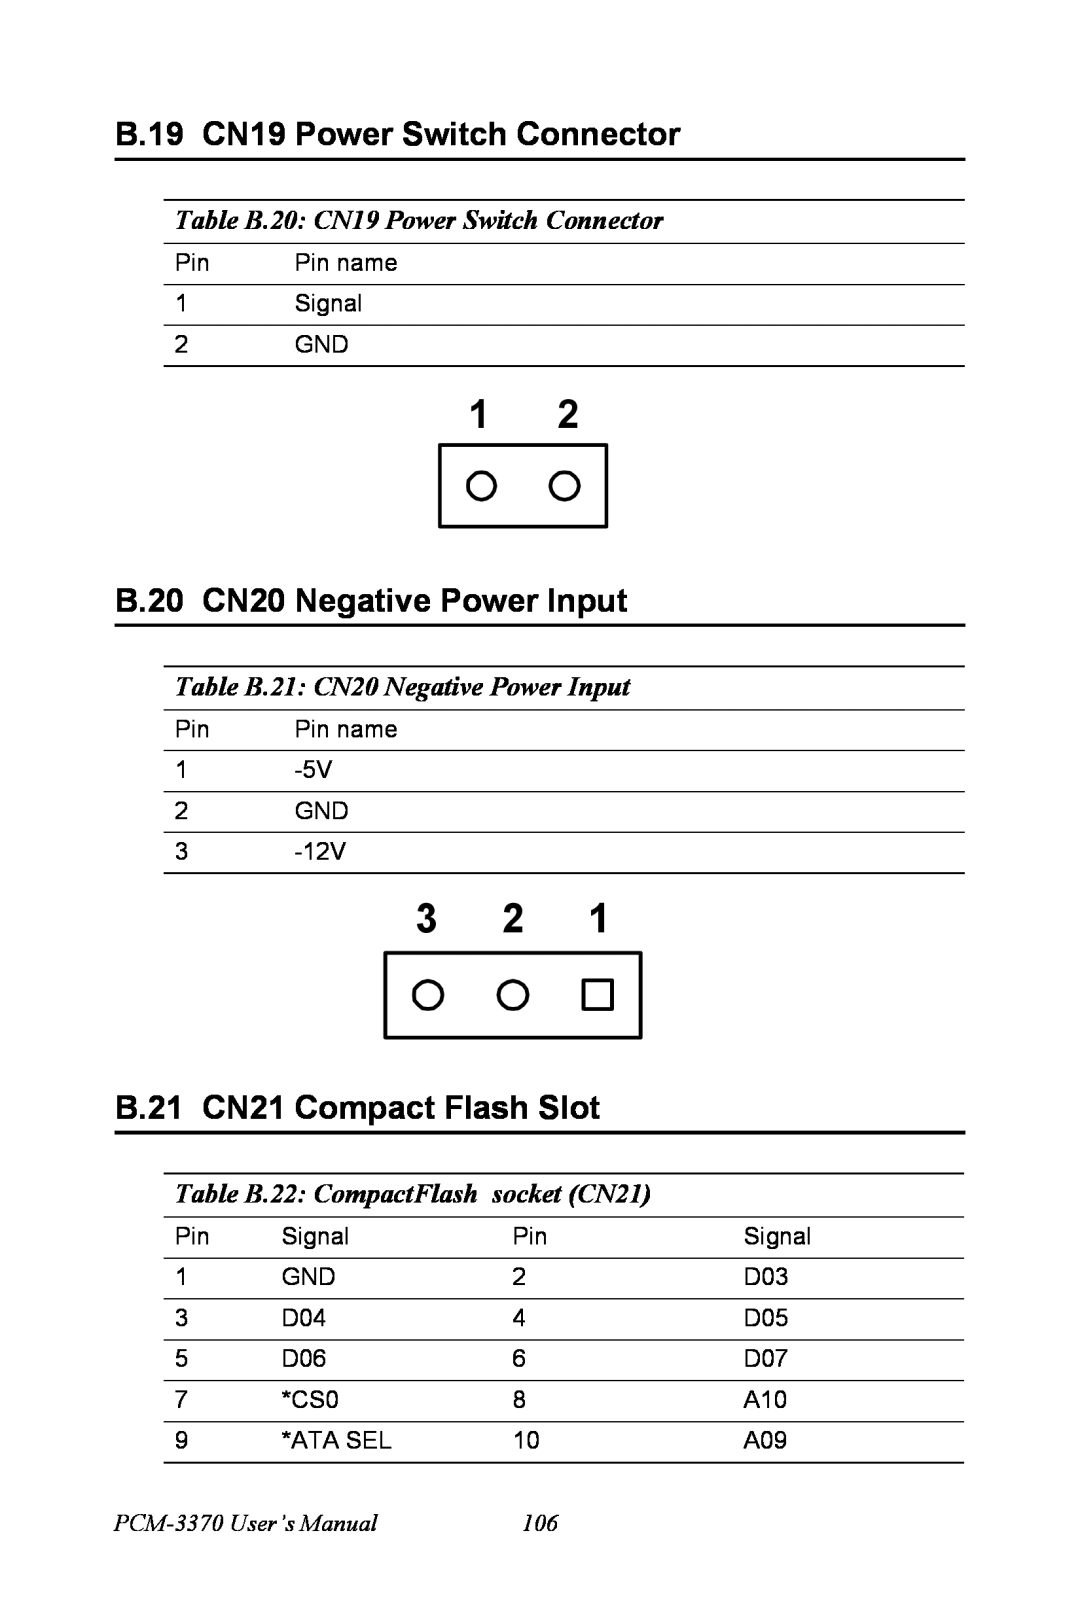 Intel PCM-3370 user manual B.19 CN19 Power Switch Connector, B.20 CN20 Negative Power Input, B.21 CN21 Compact Flash Slot 